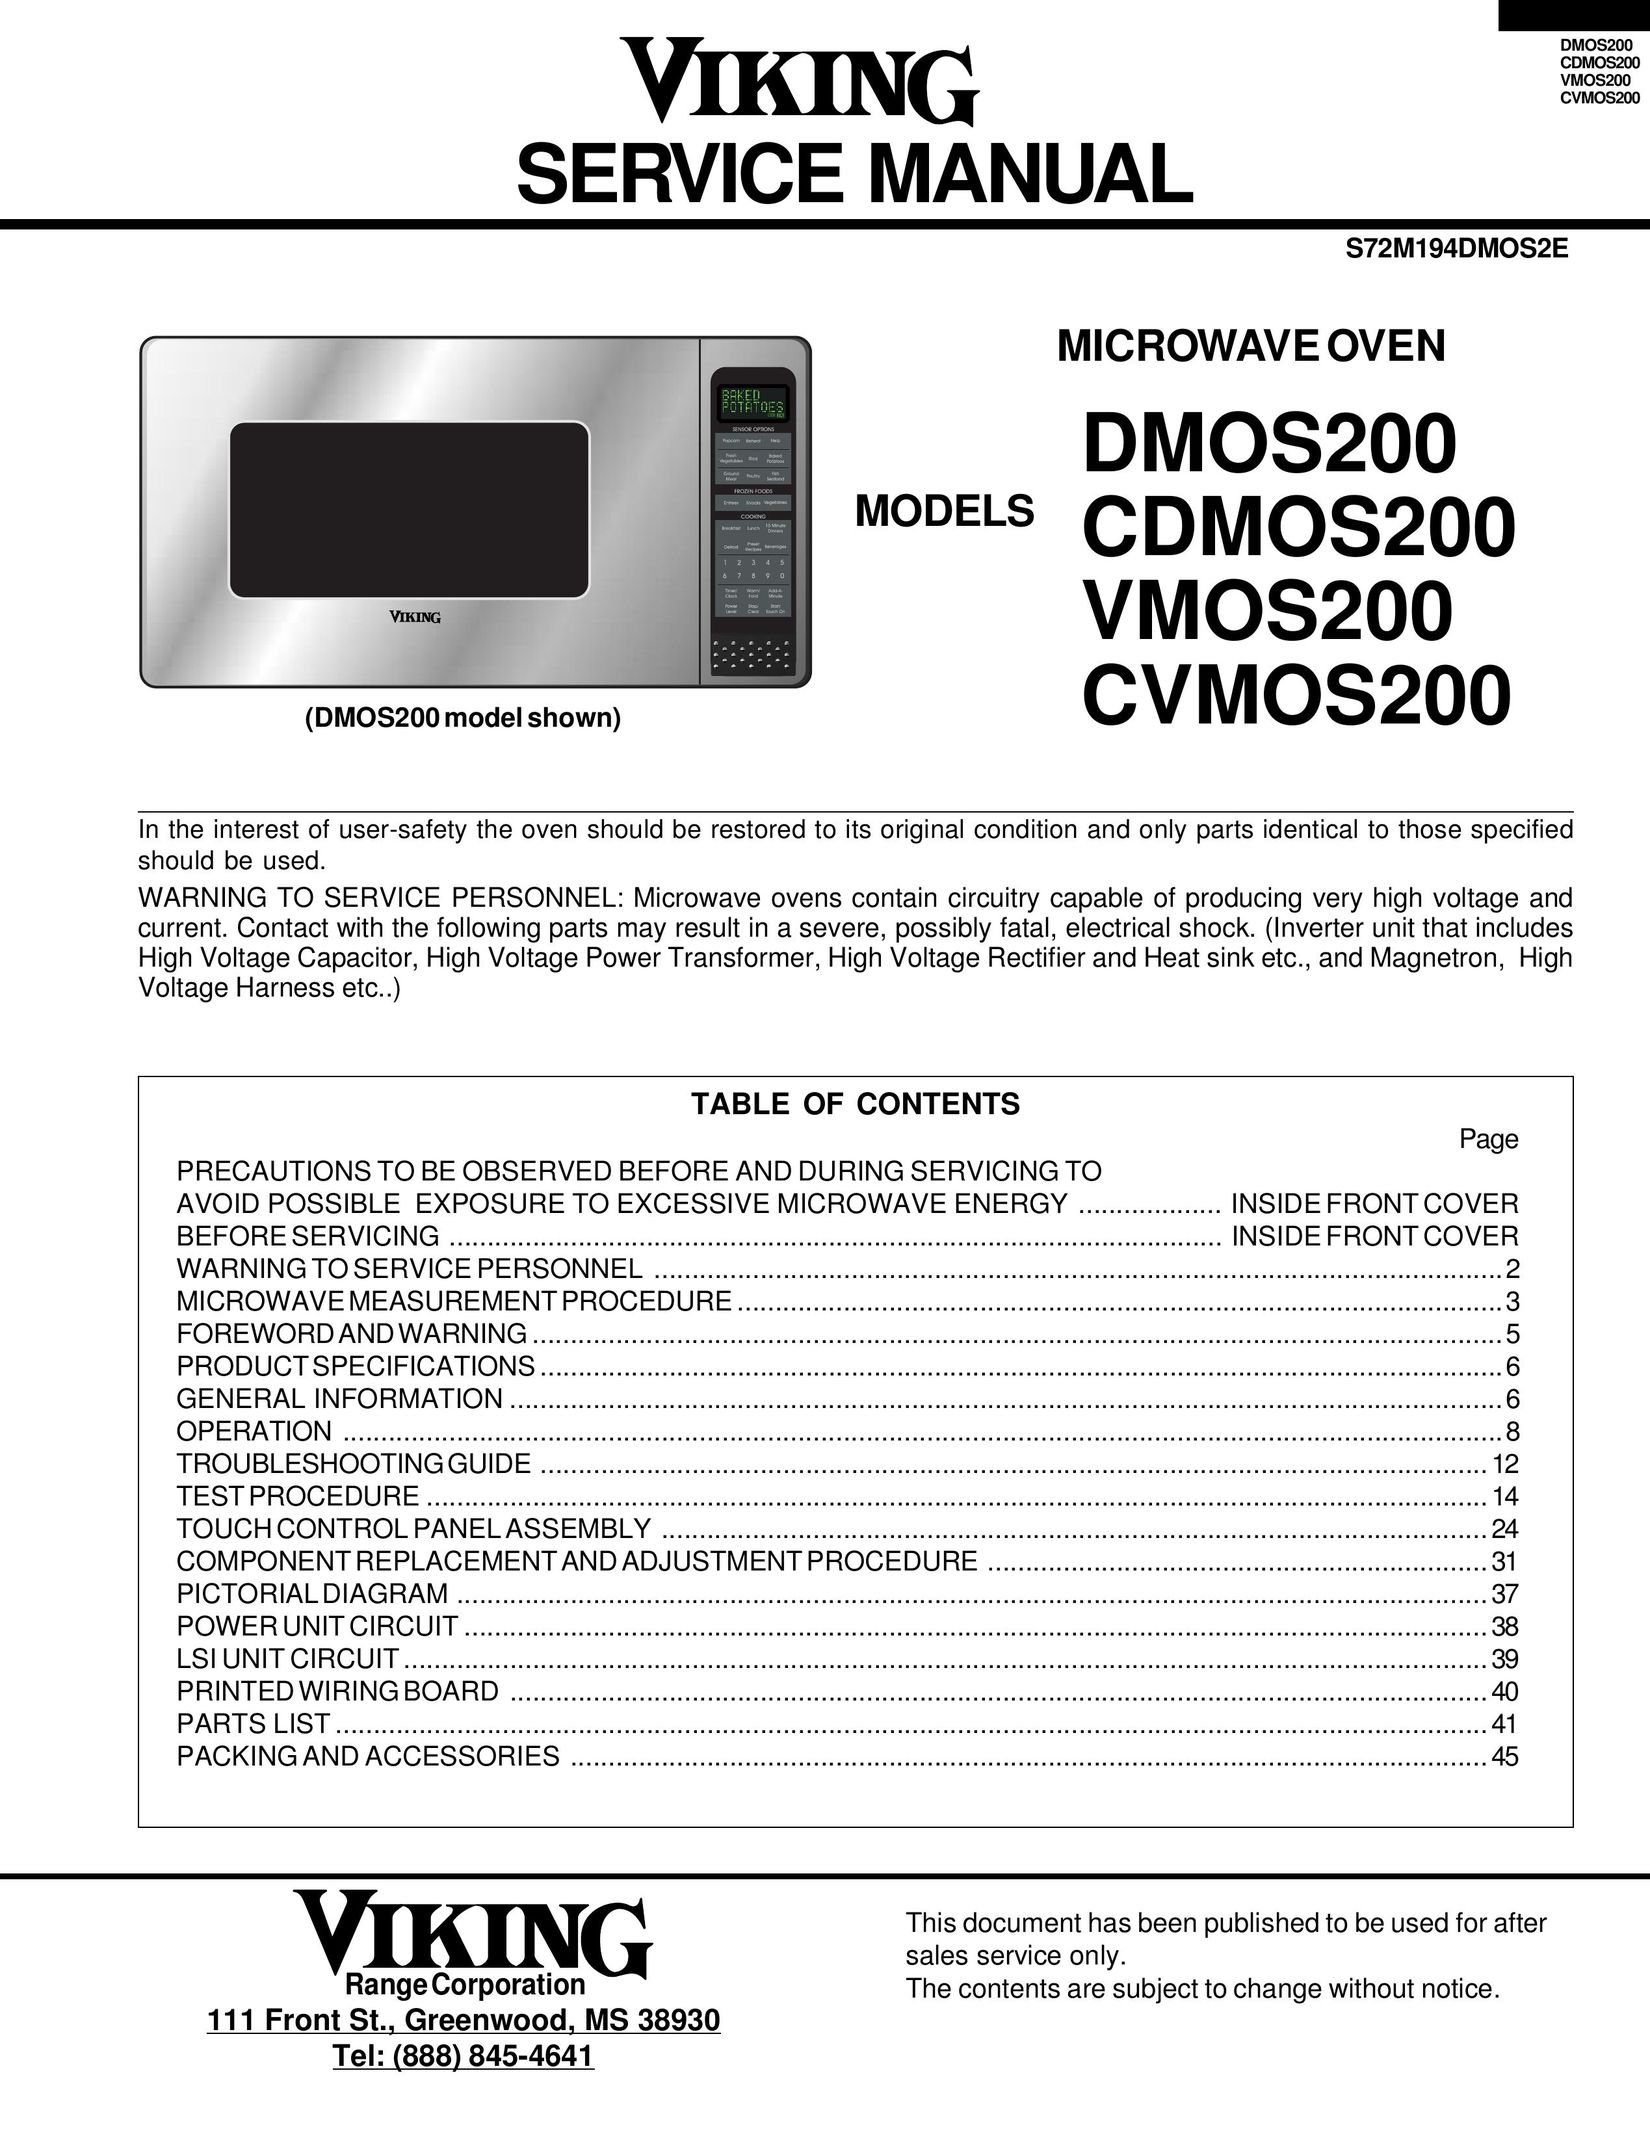 Viking CDMOS200 Microwave Oven User Manual